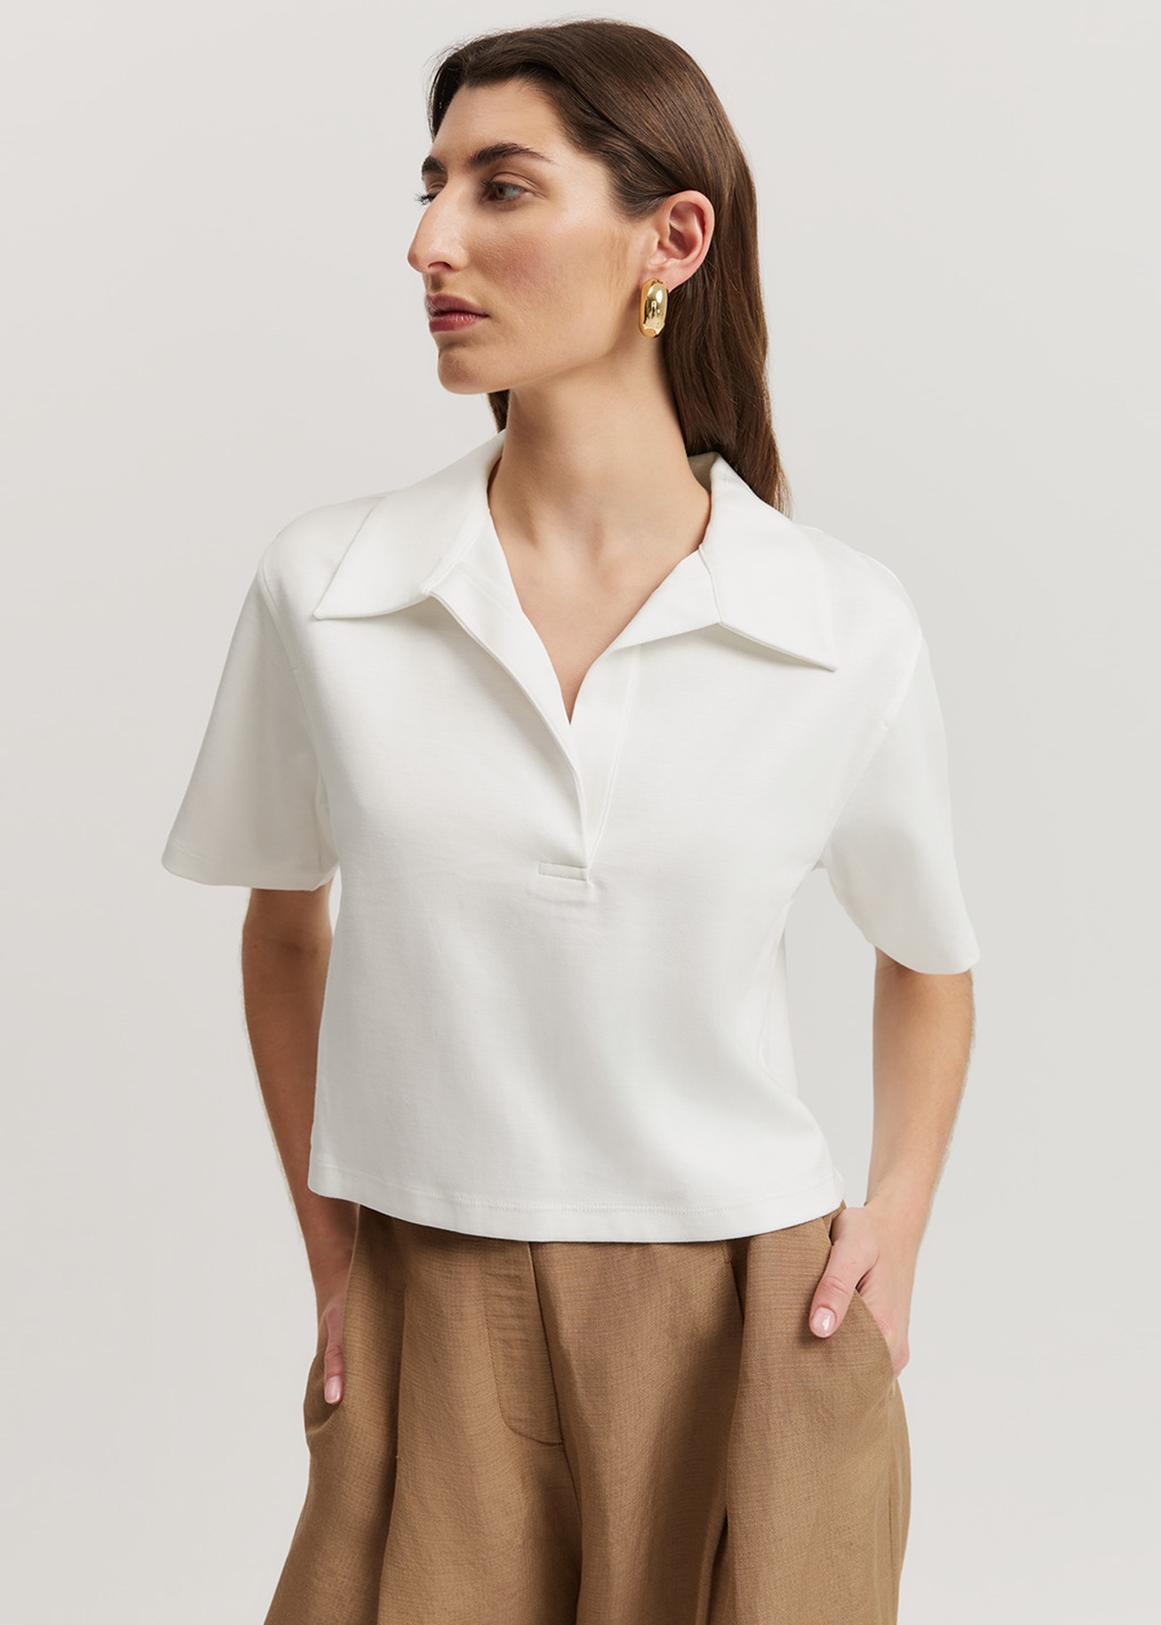 Ladies Polo Shirt Cream Beige 100% Organic Cotton Vegan Short Sleeve Pique  Tops